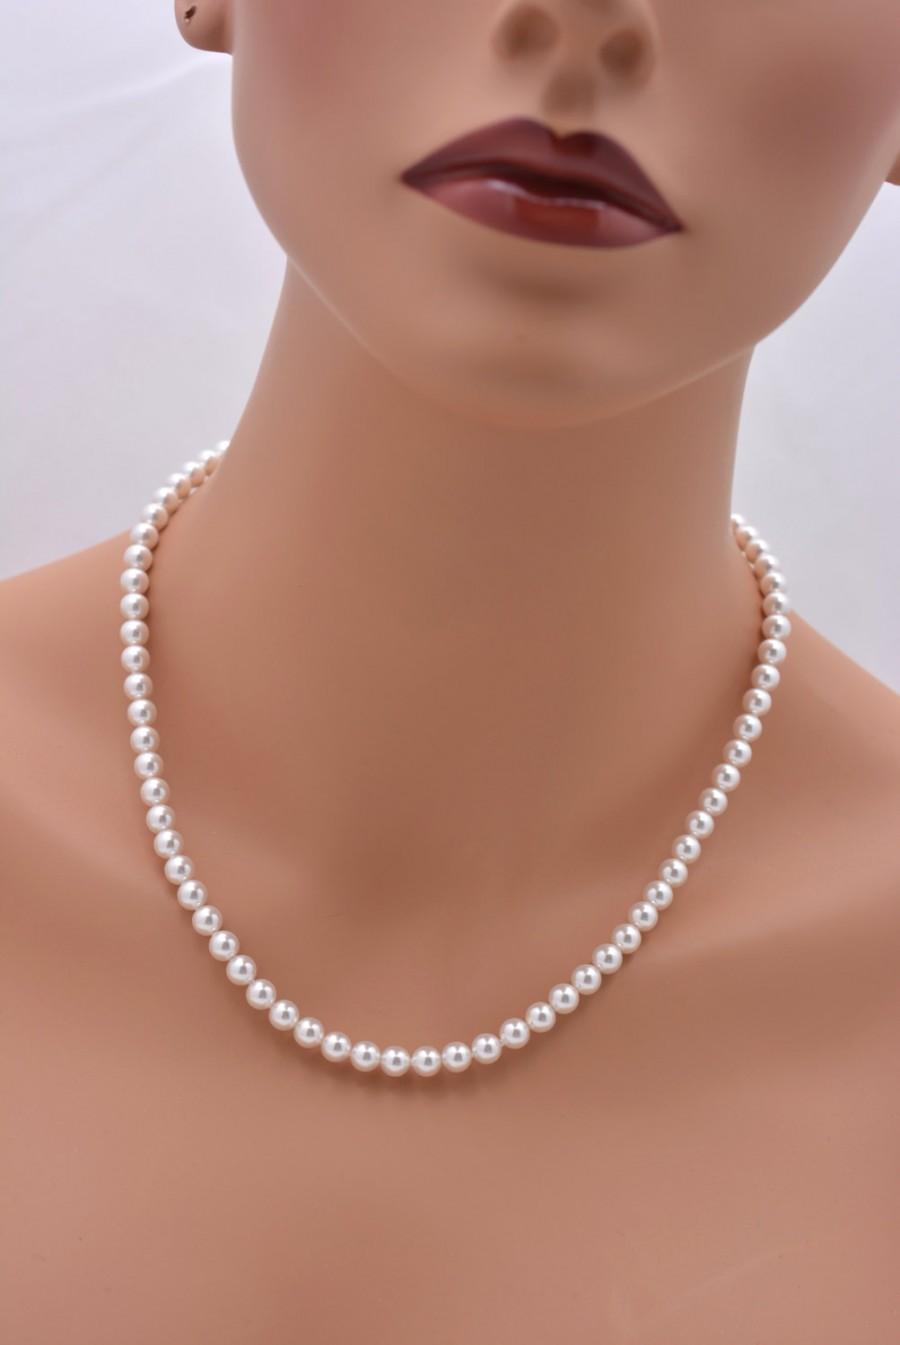 زفاف - Pearl Necklace, Pearl Bridesmaid Necklace, Classic Pearl Necklace, Pearl Strand Necklace, White or Ivory Pearl Necklace, 6mm Pearl 0259